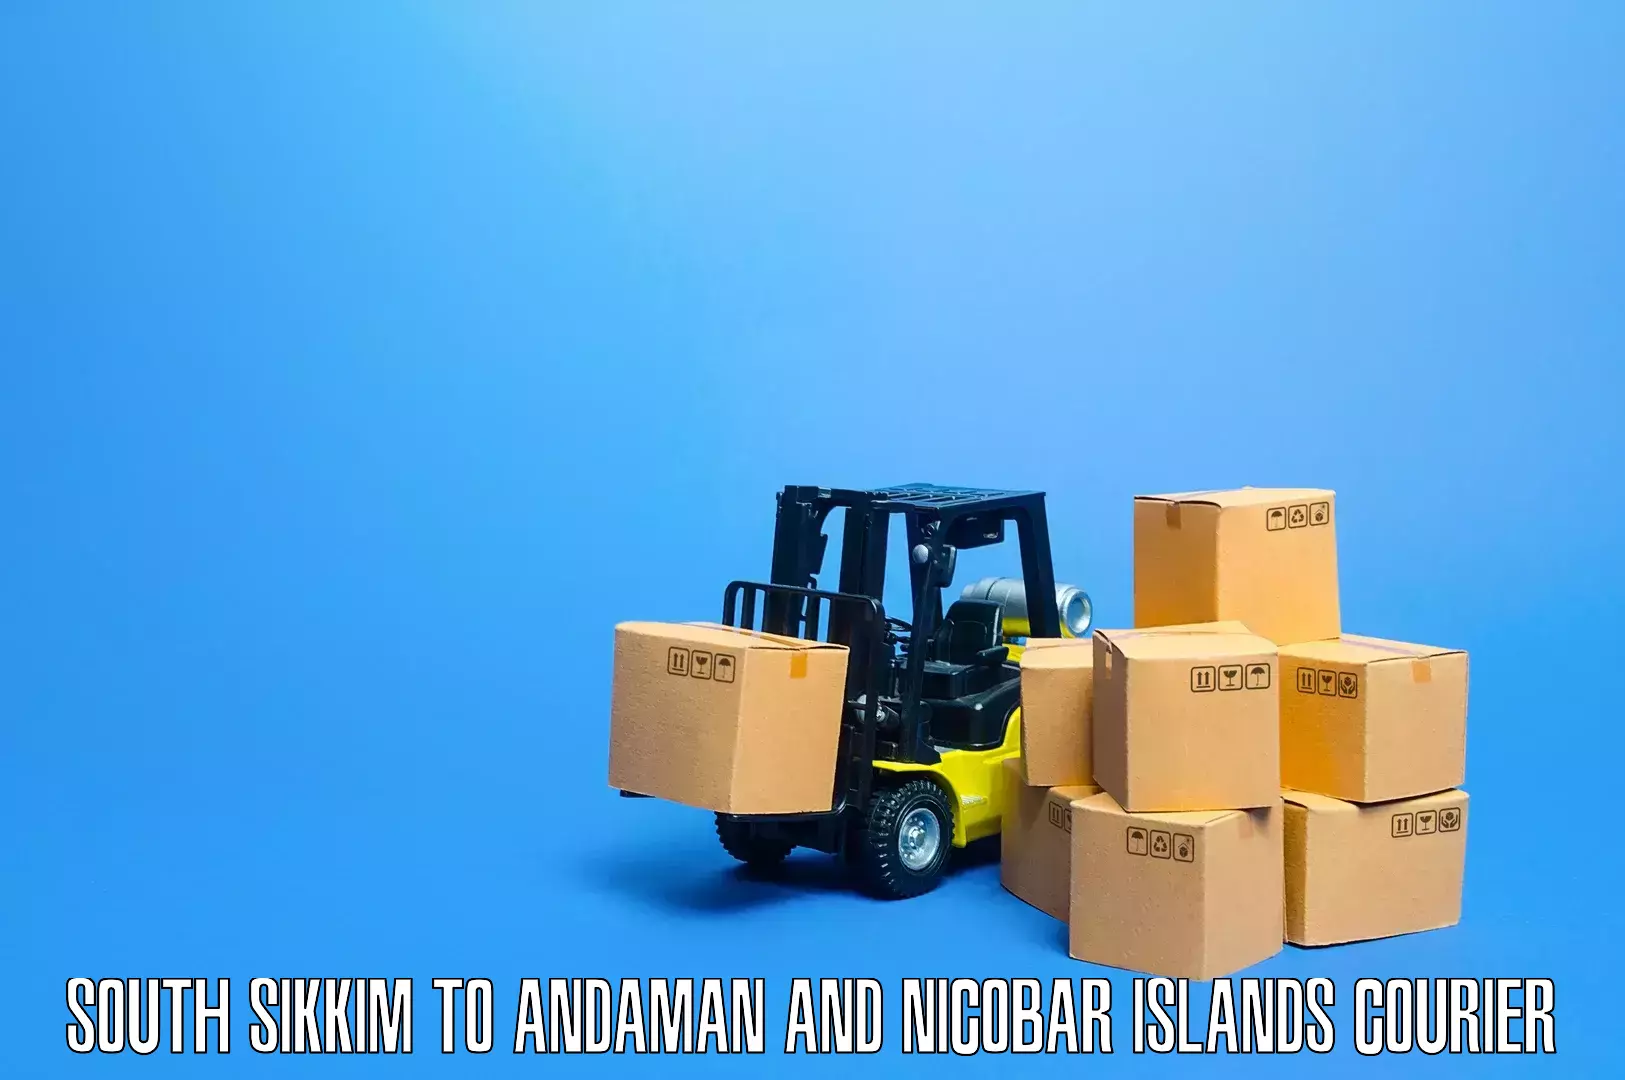 Expert goods movers South Sikkim to Andaman and Nicobar Islands